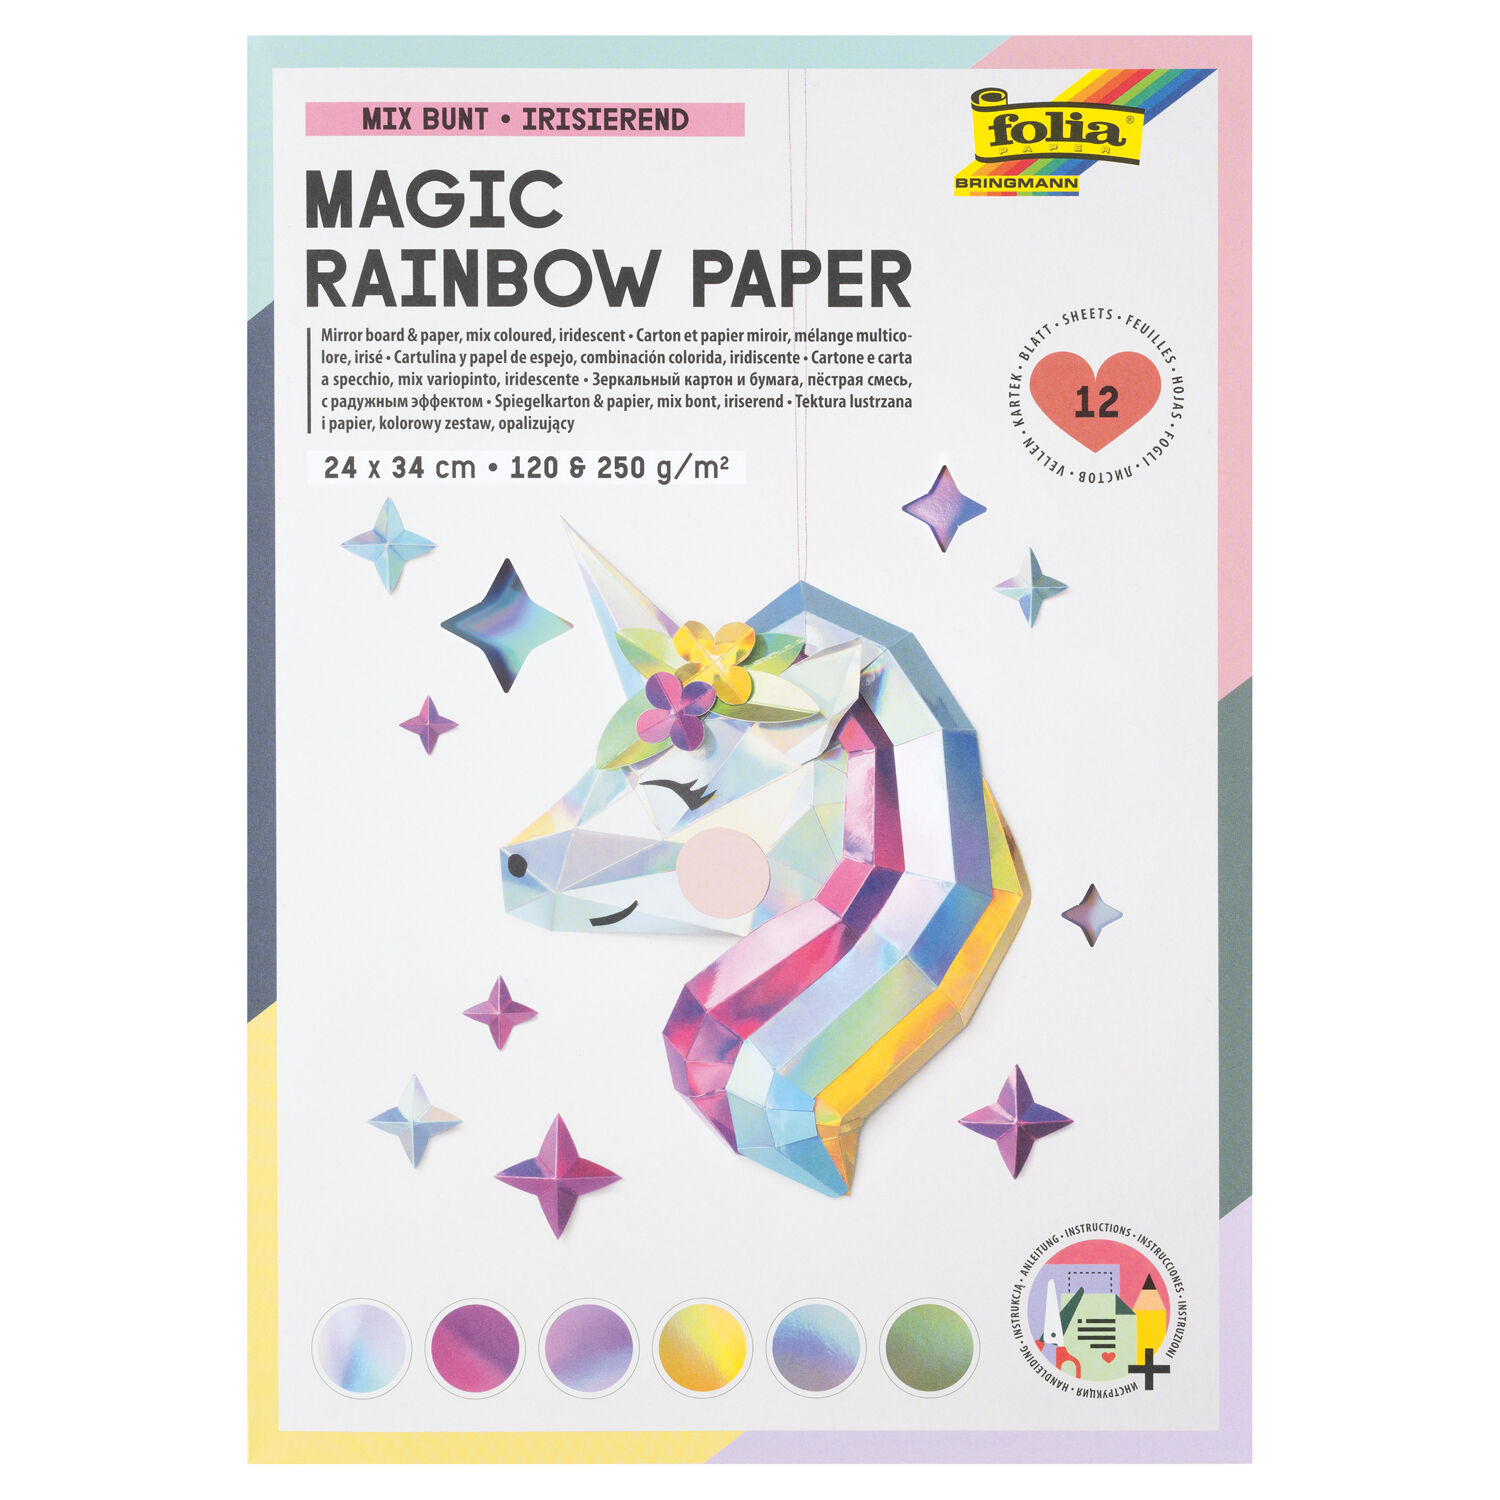 NEU Magic Rainbow Papier-Block, 24x34cm, 12 Blatt, 6 irisierende Farben sortiert je in 120 & 250 g/m